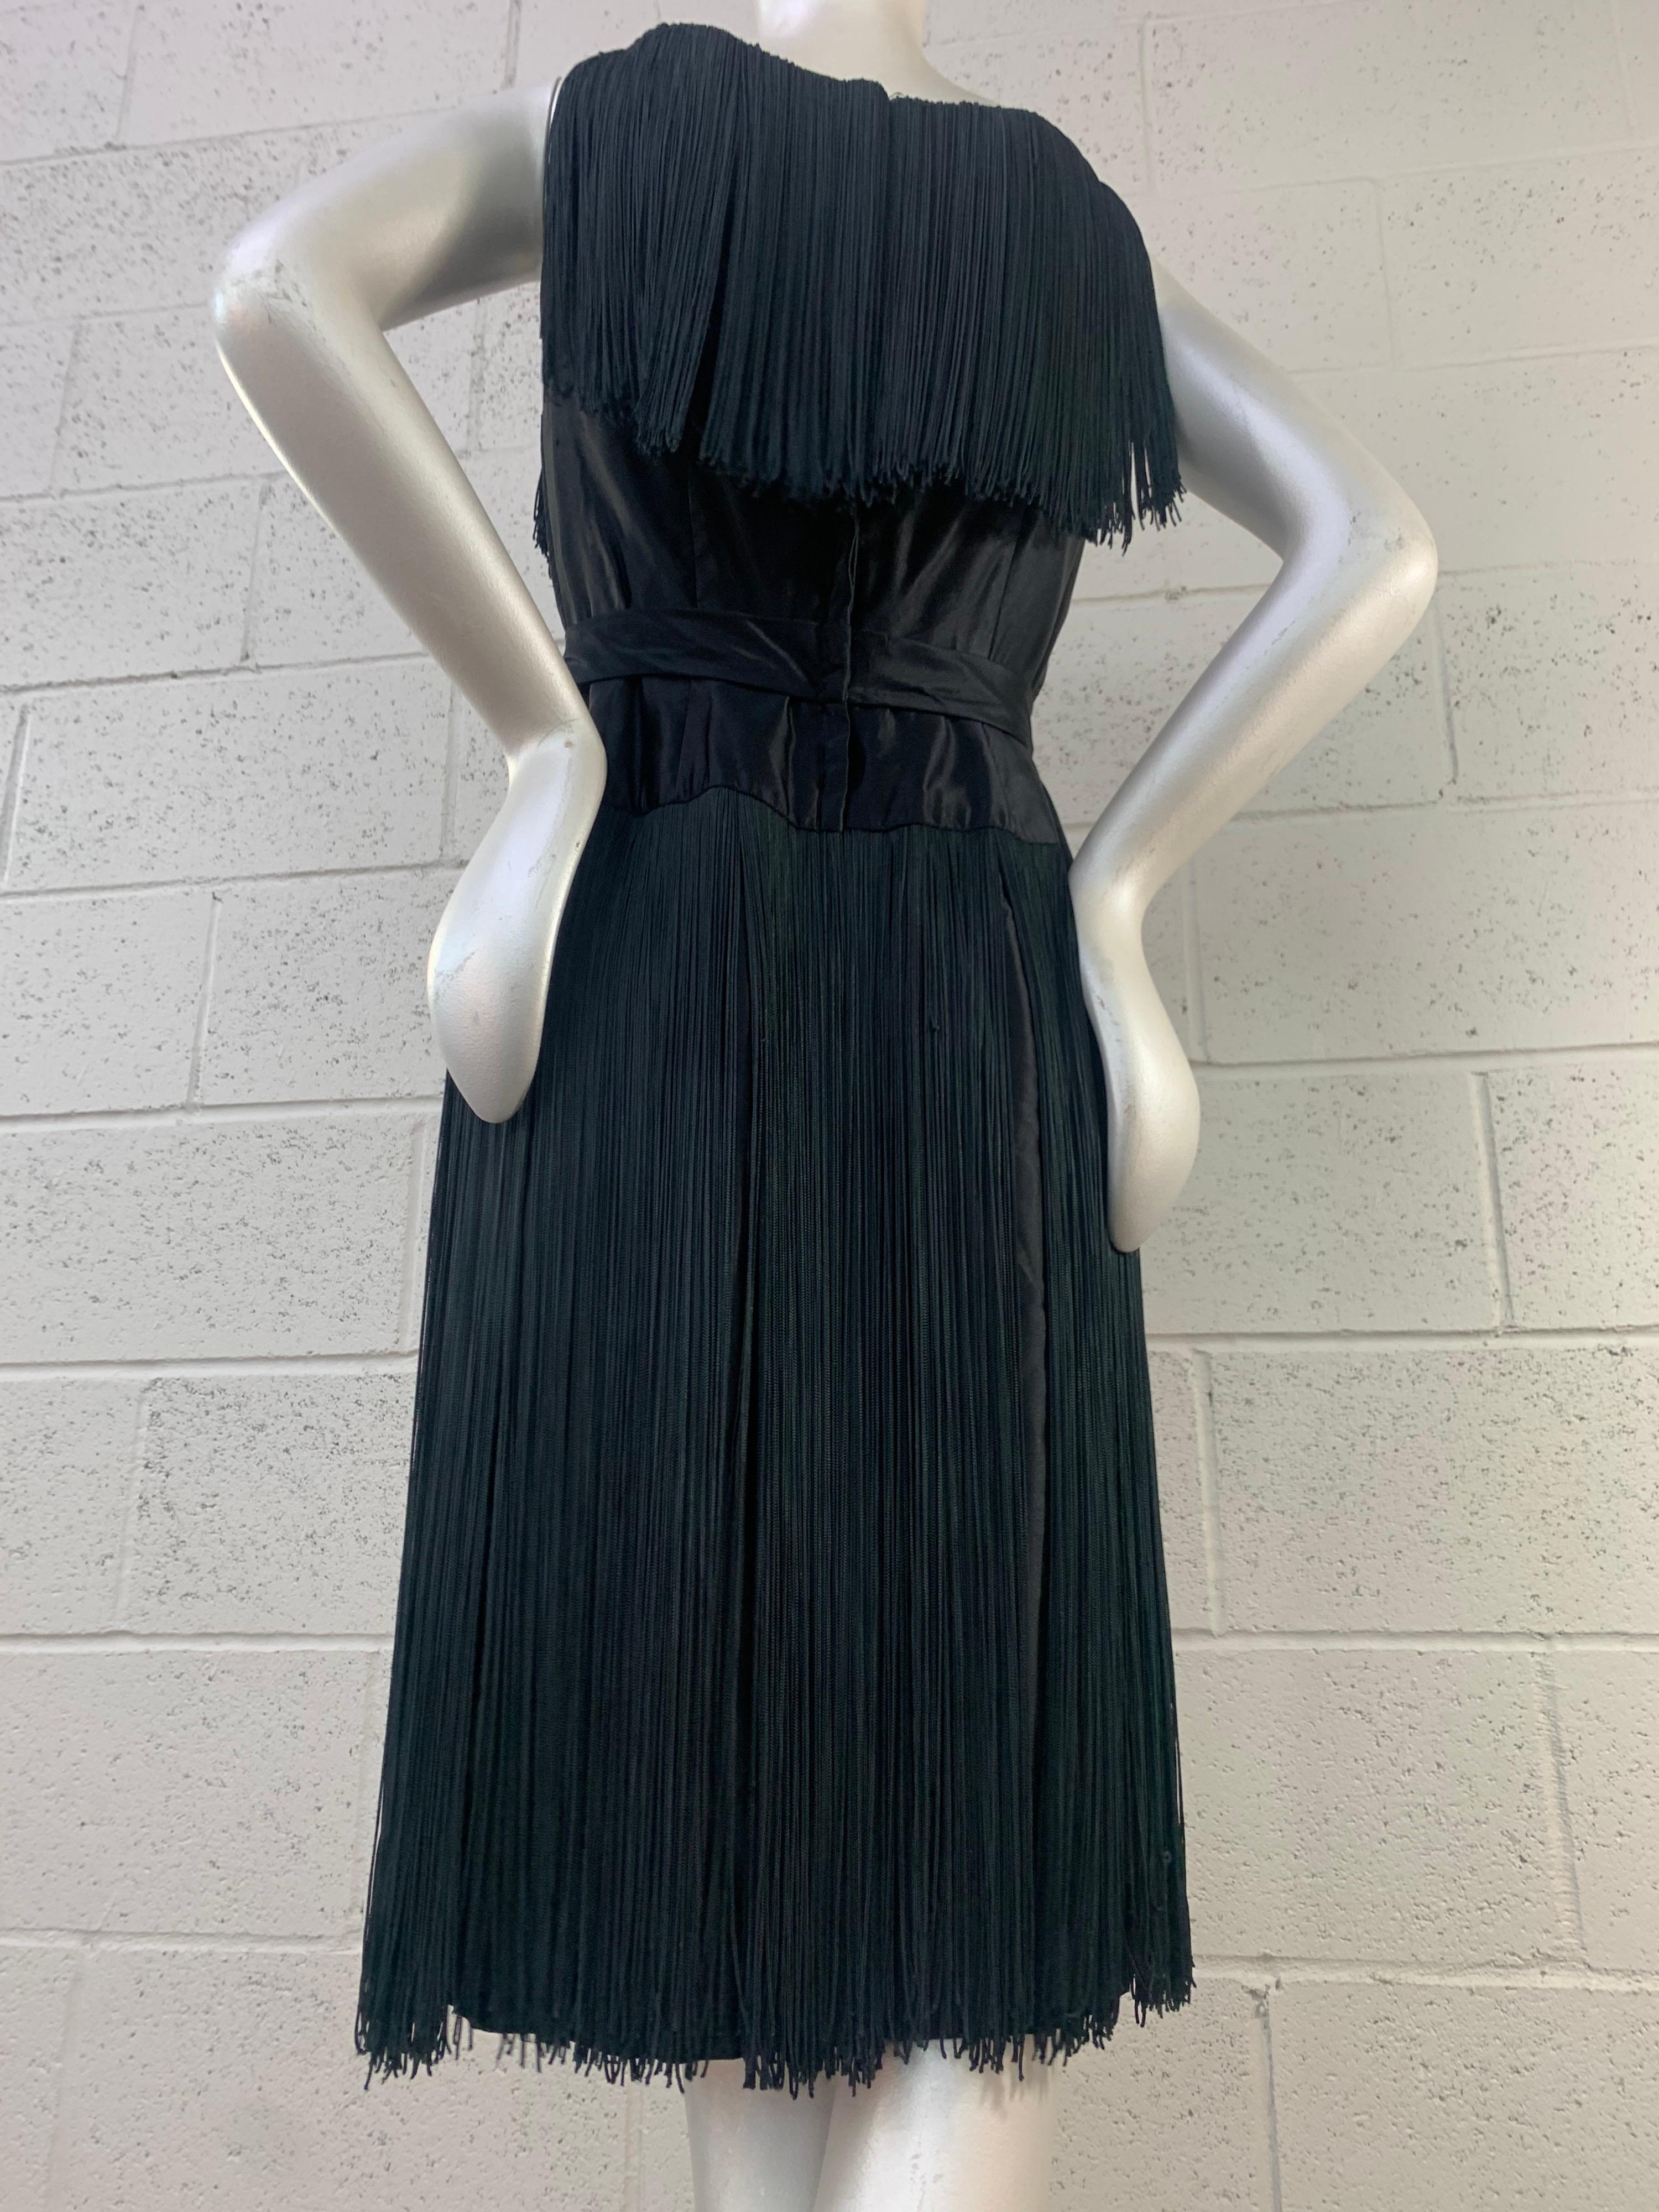 1961 Saks Fifth Avenue Black Silk Satin Sheath Dress w/ Heavy Long Fringe  For Sale 8